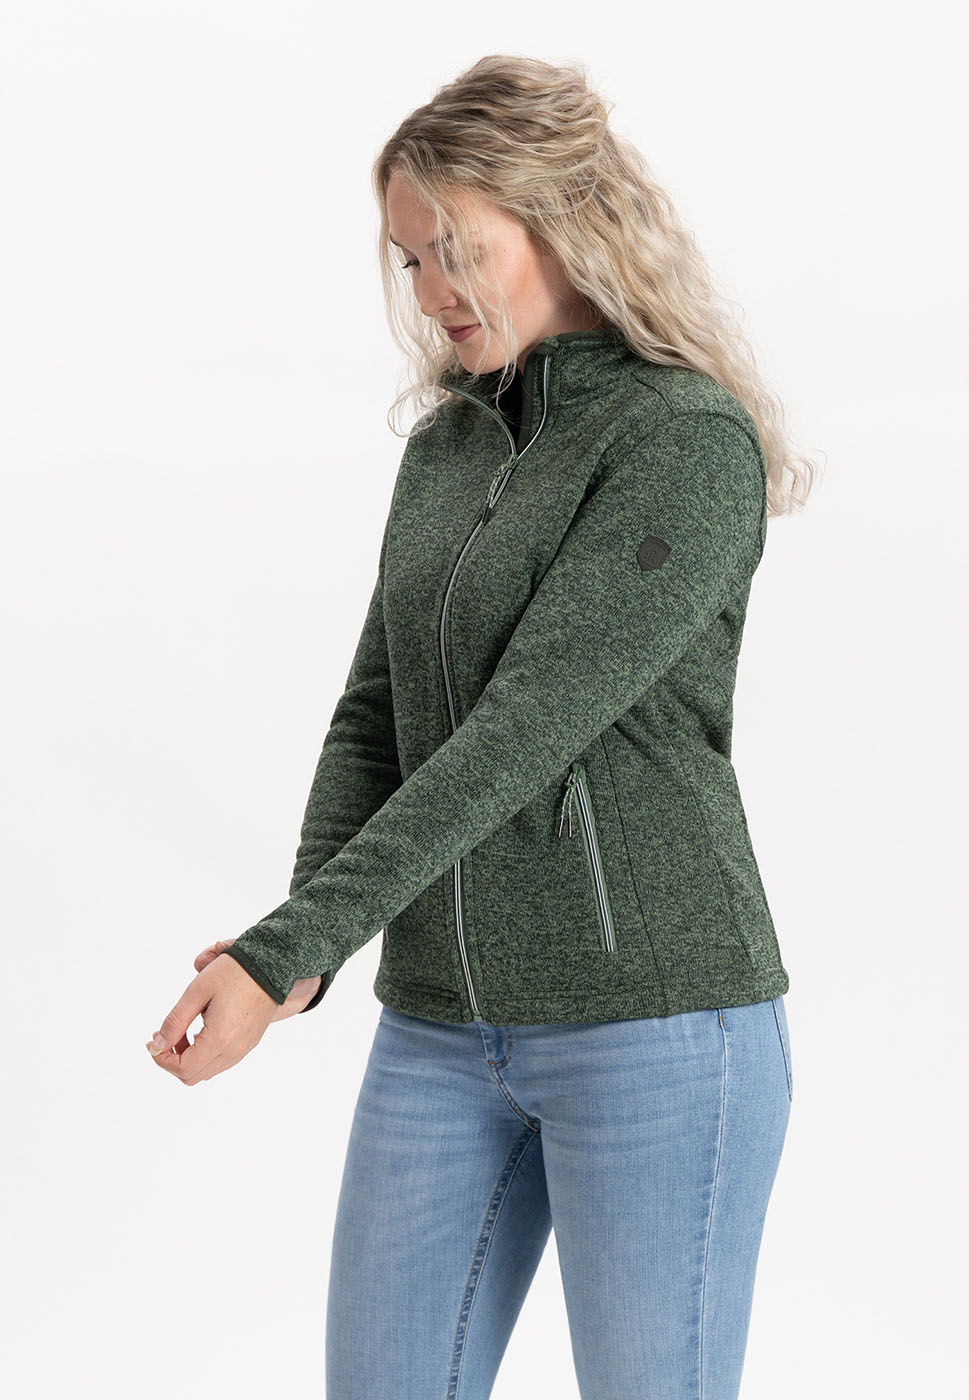 Kjelvik Scandinavian Clothing - Women Knitwear Alexa Balsam green